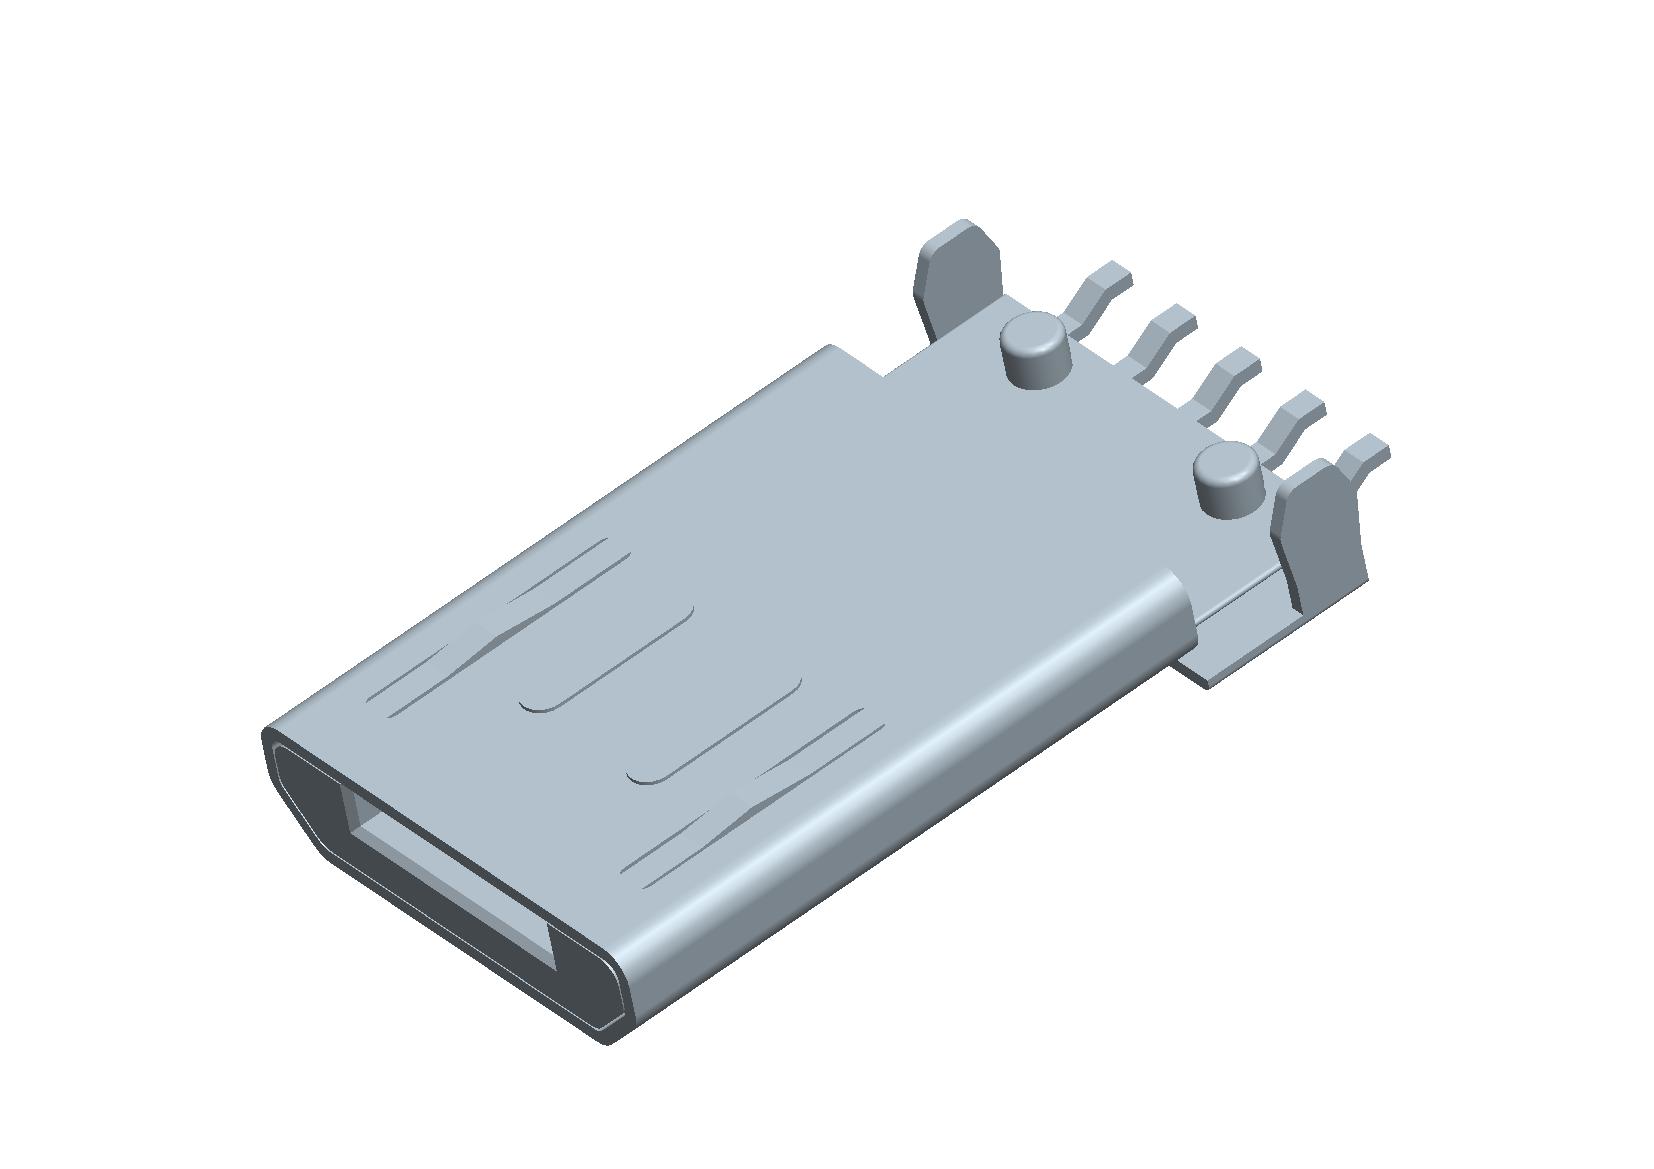 HDMI Connector 連接器, USB A Type 母座